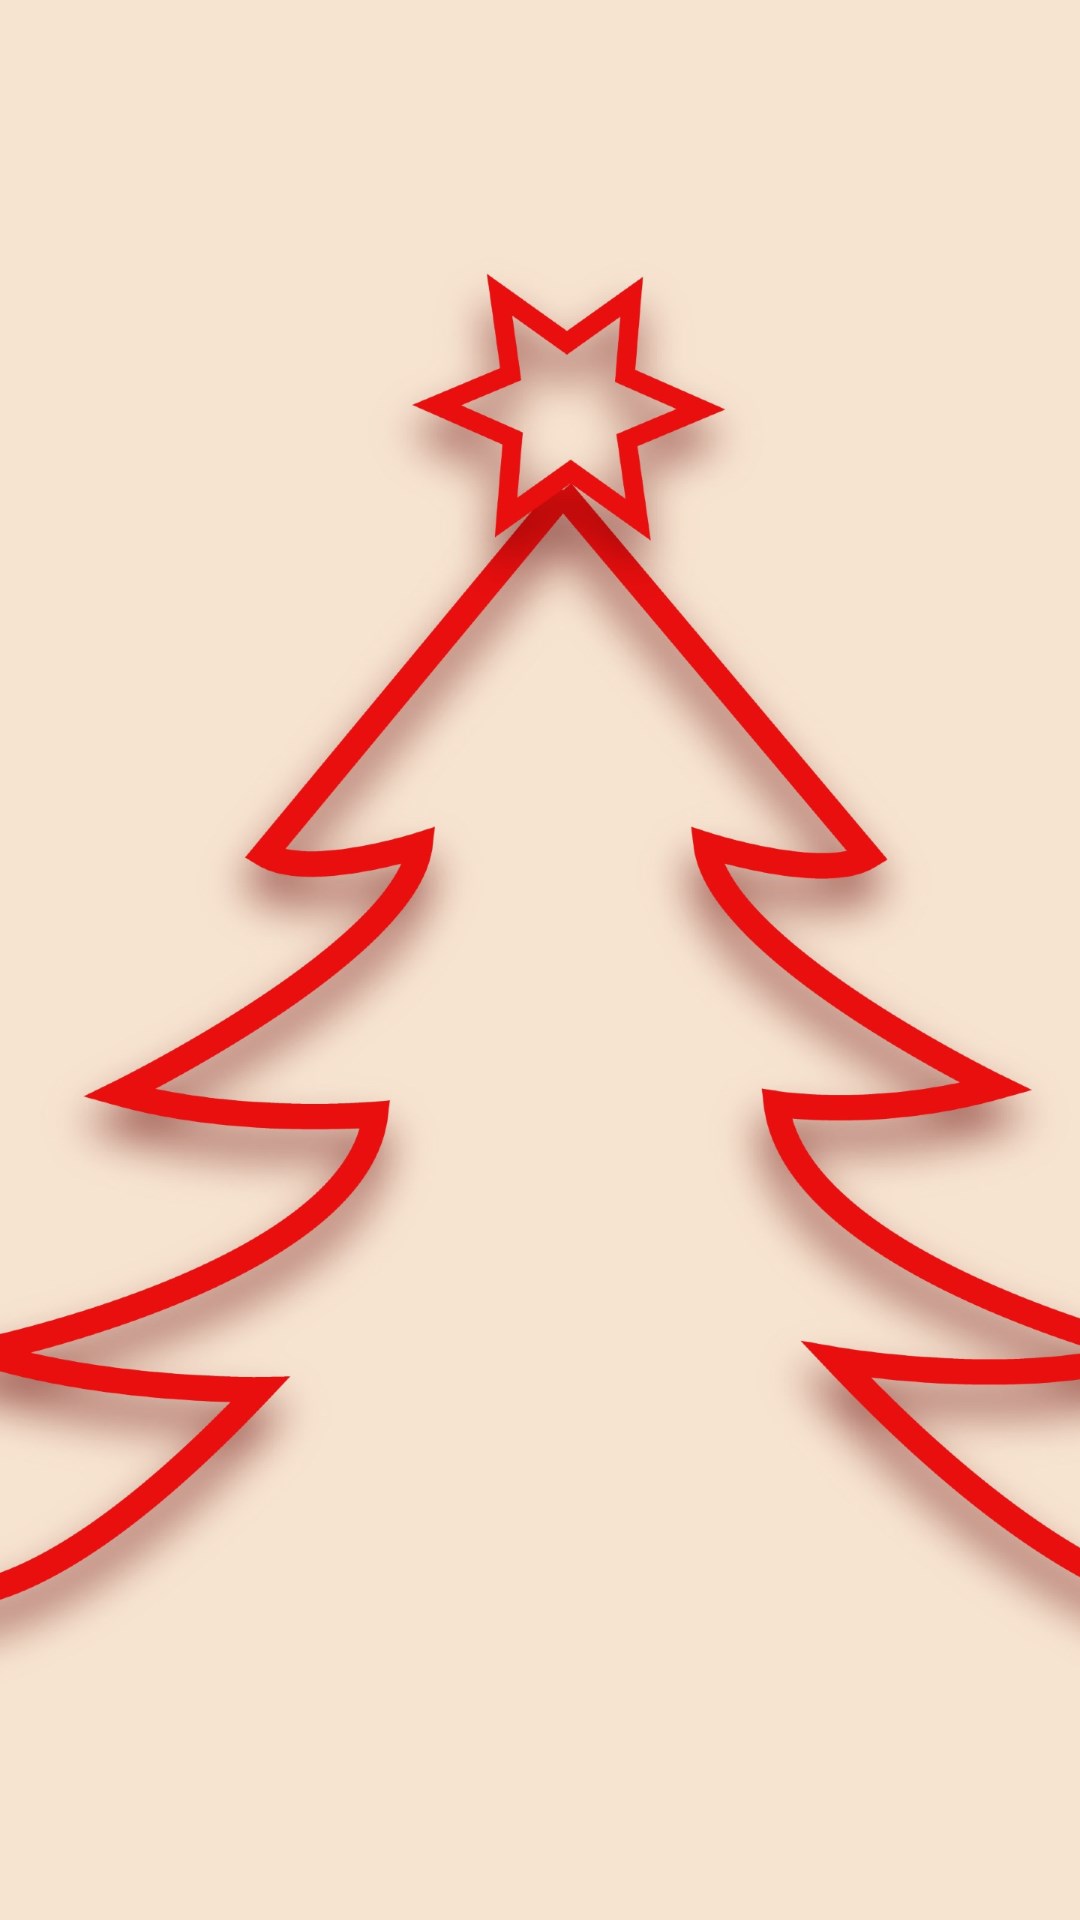 Red minimalistic Christmas tree design wallpaper 1080x1920